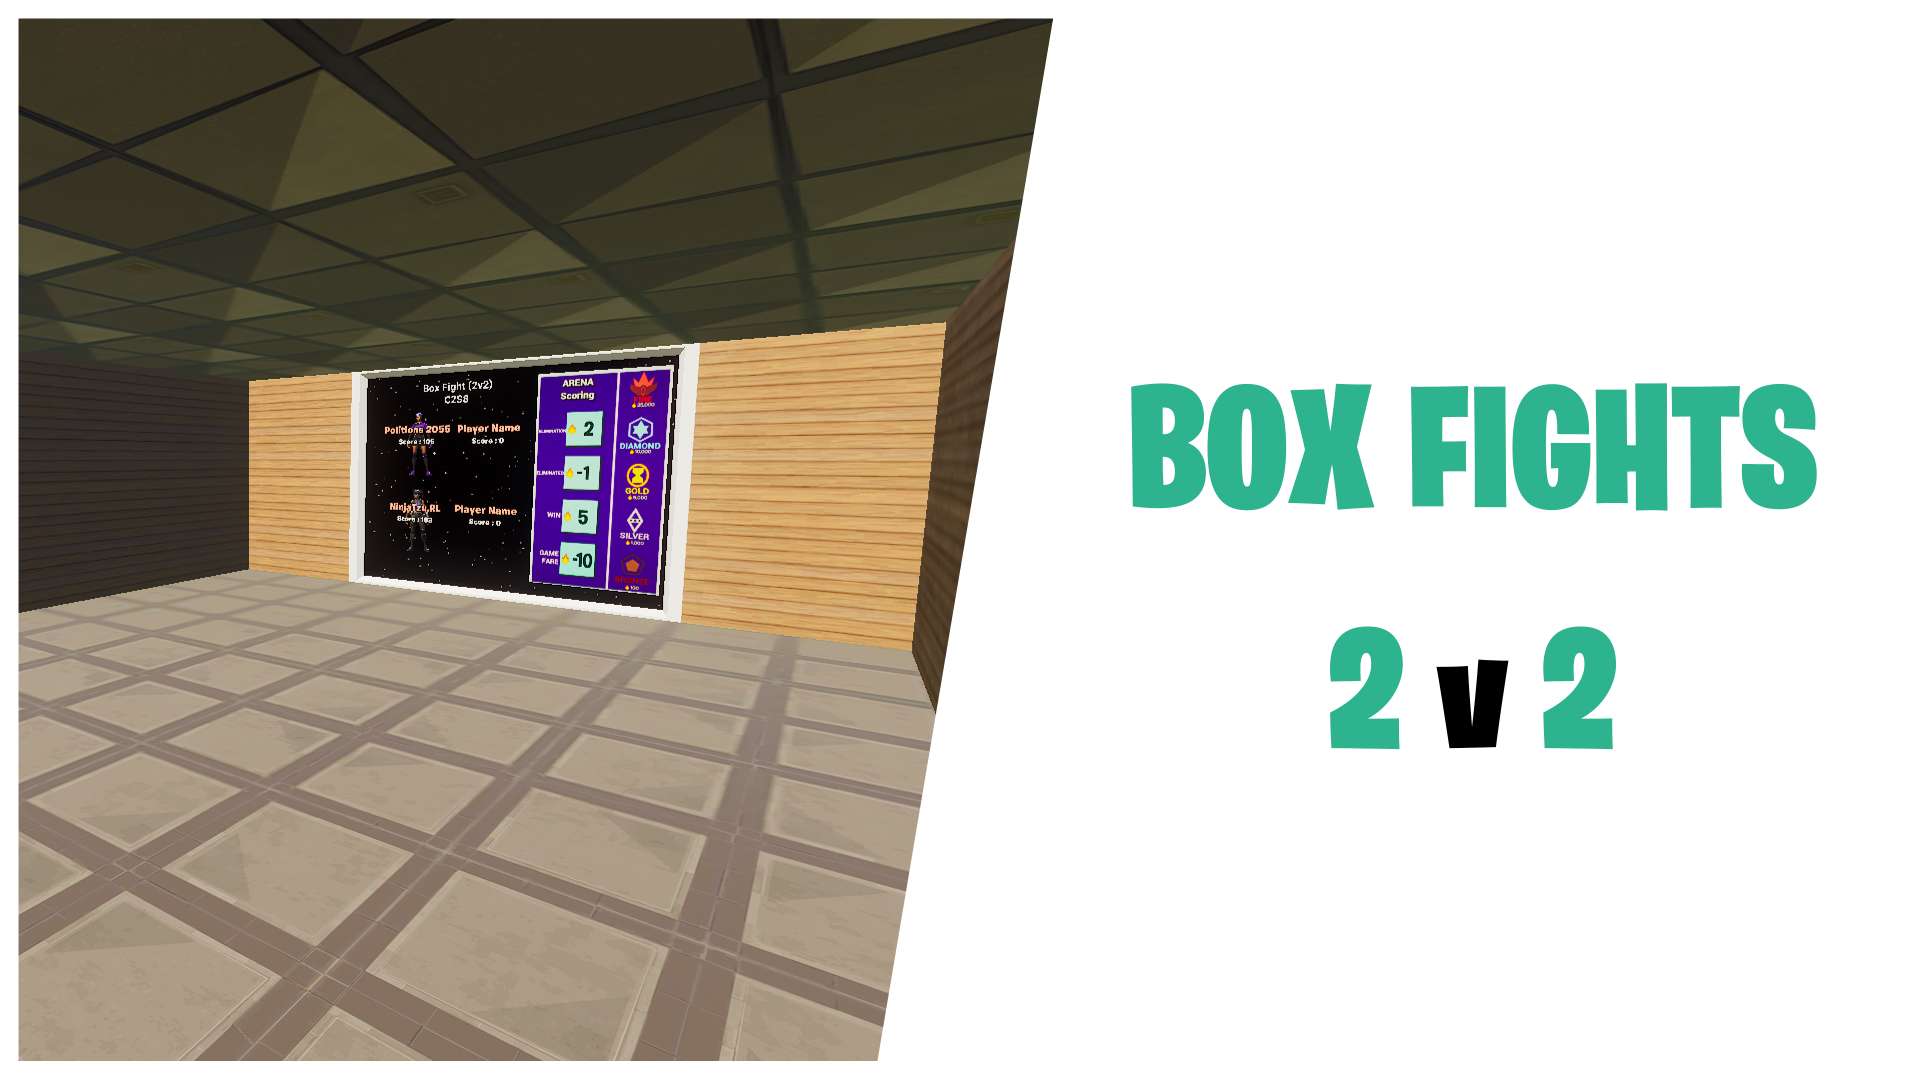 1v1 box fight code